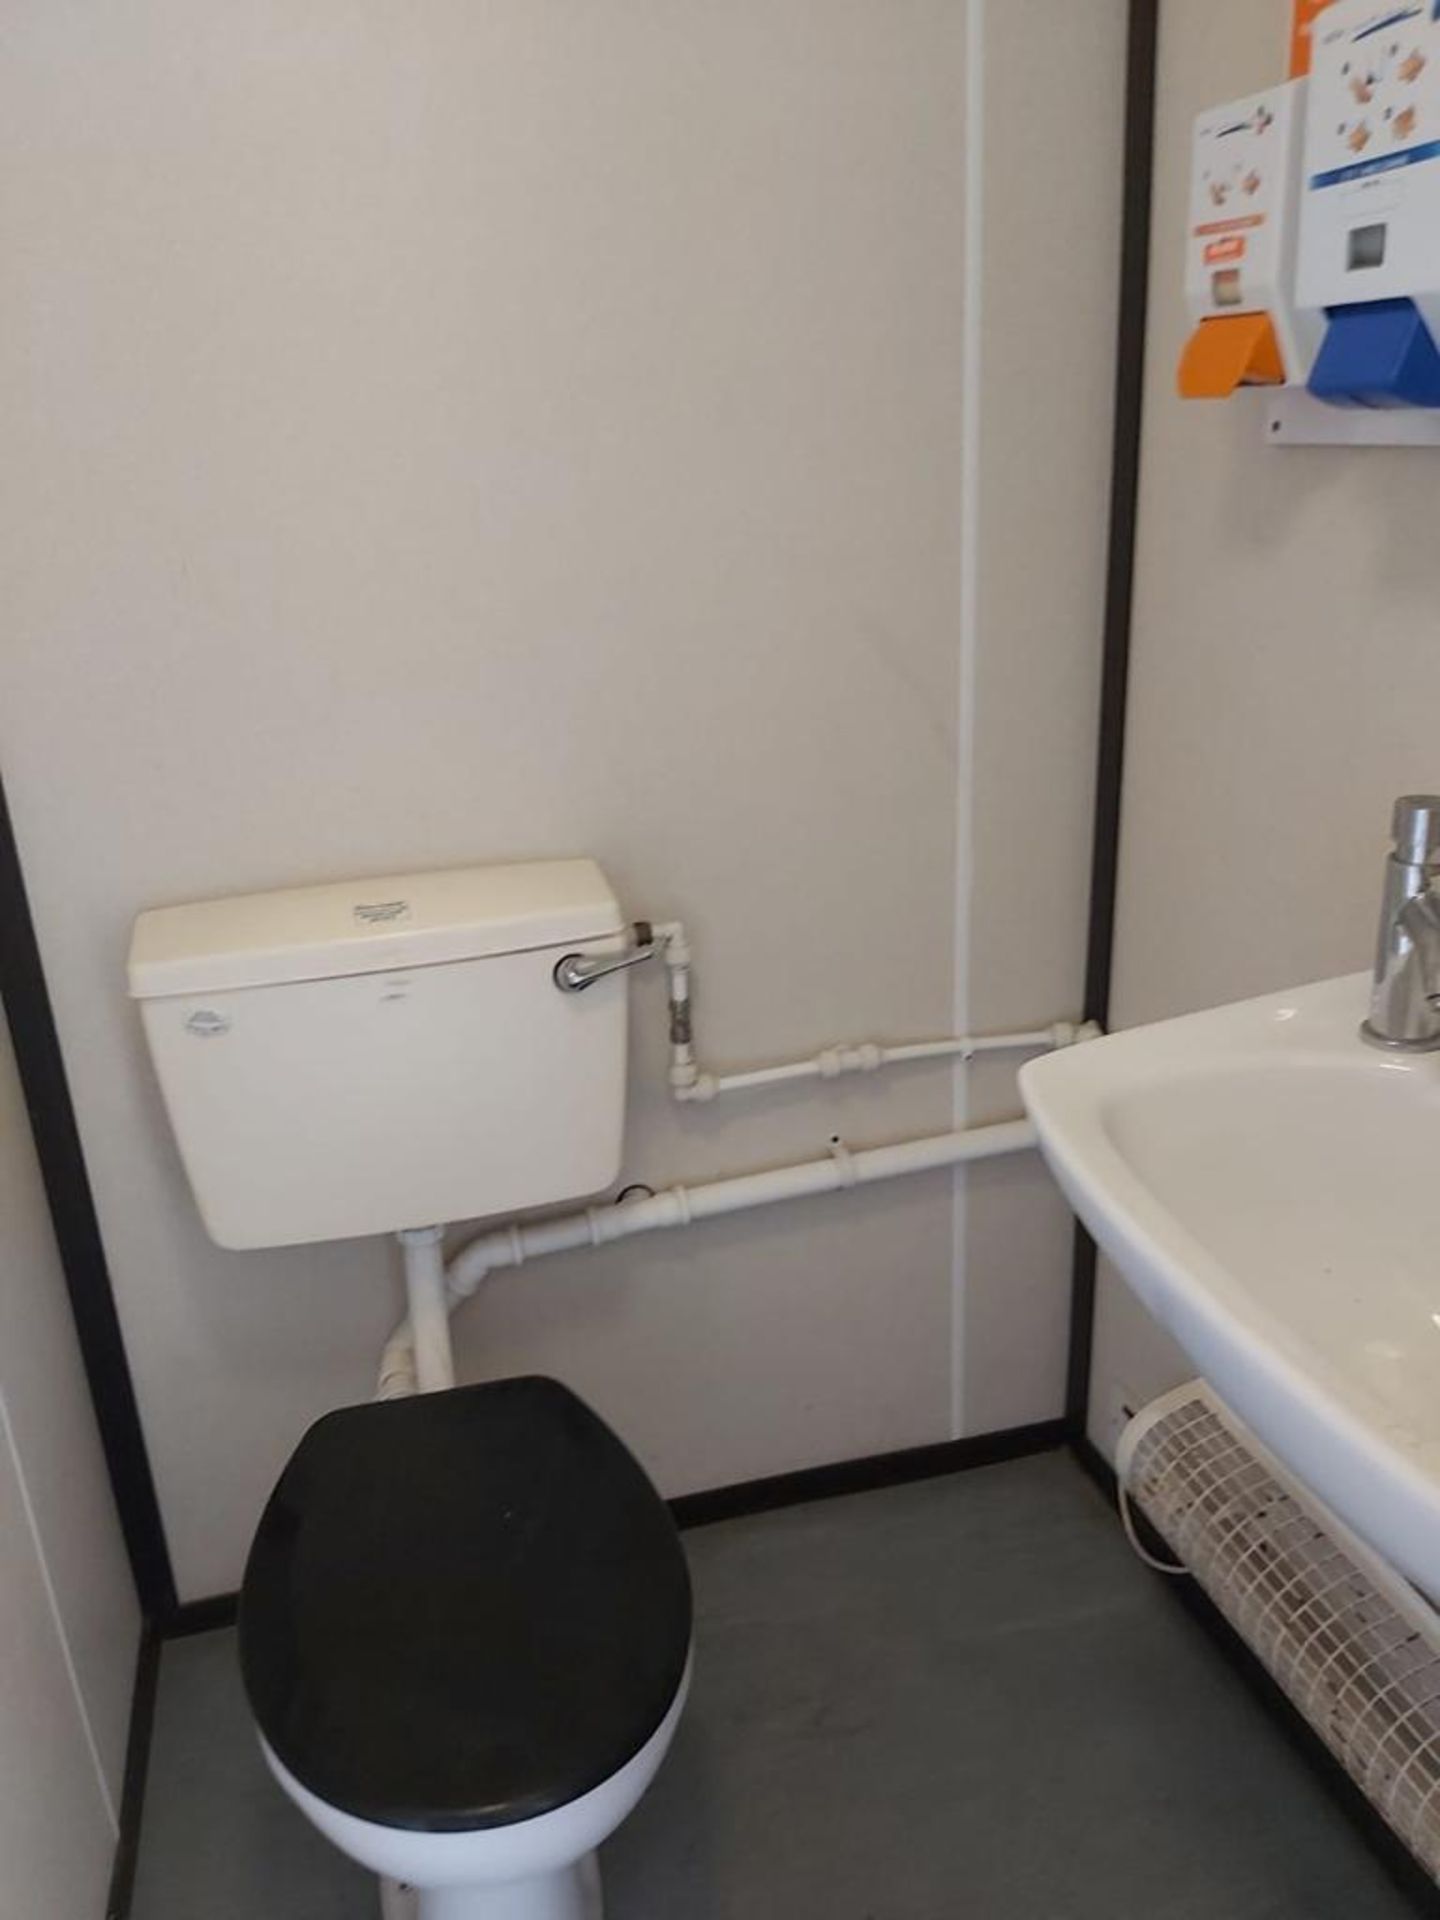 Self contained powered Kitchen Cabin with Toilet, Sink, Generator Water Storage 24x10 - Bild 10 aus 30